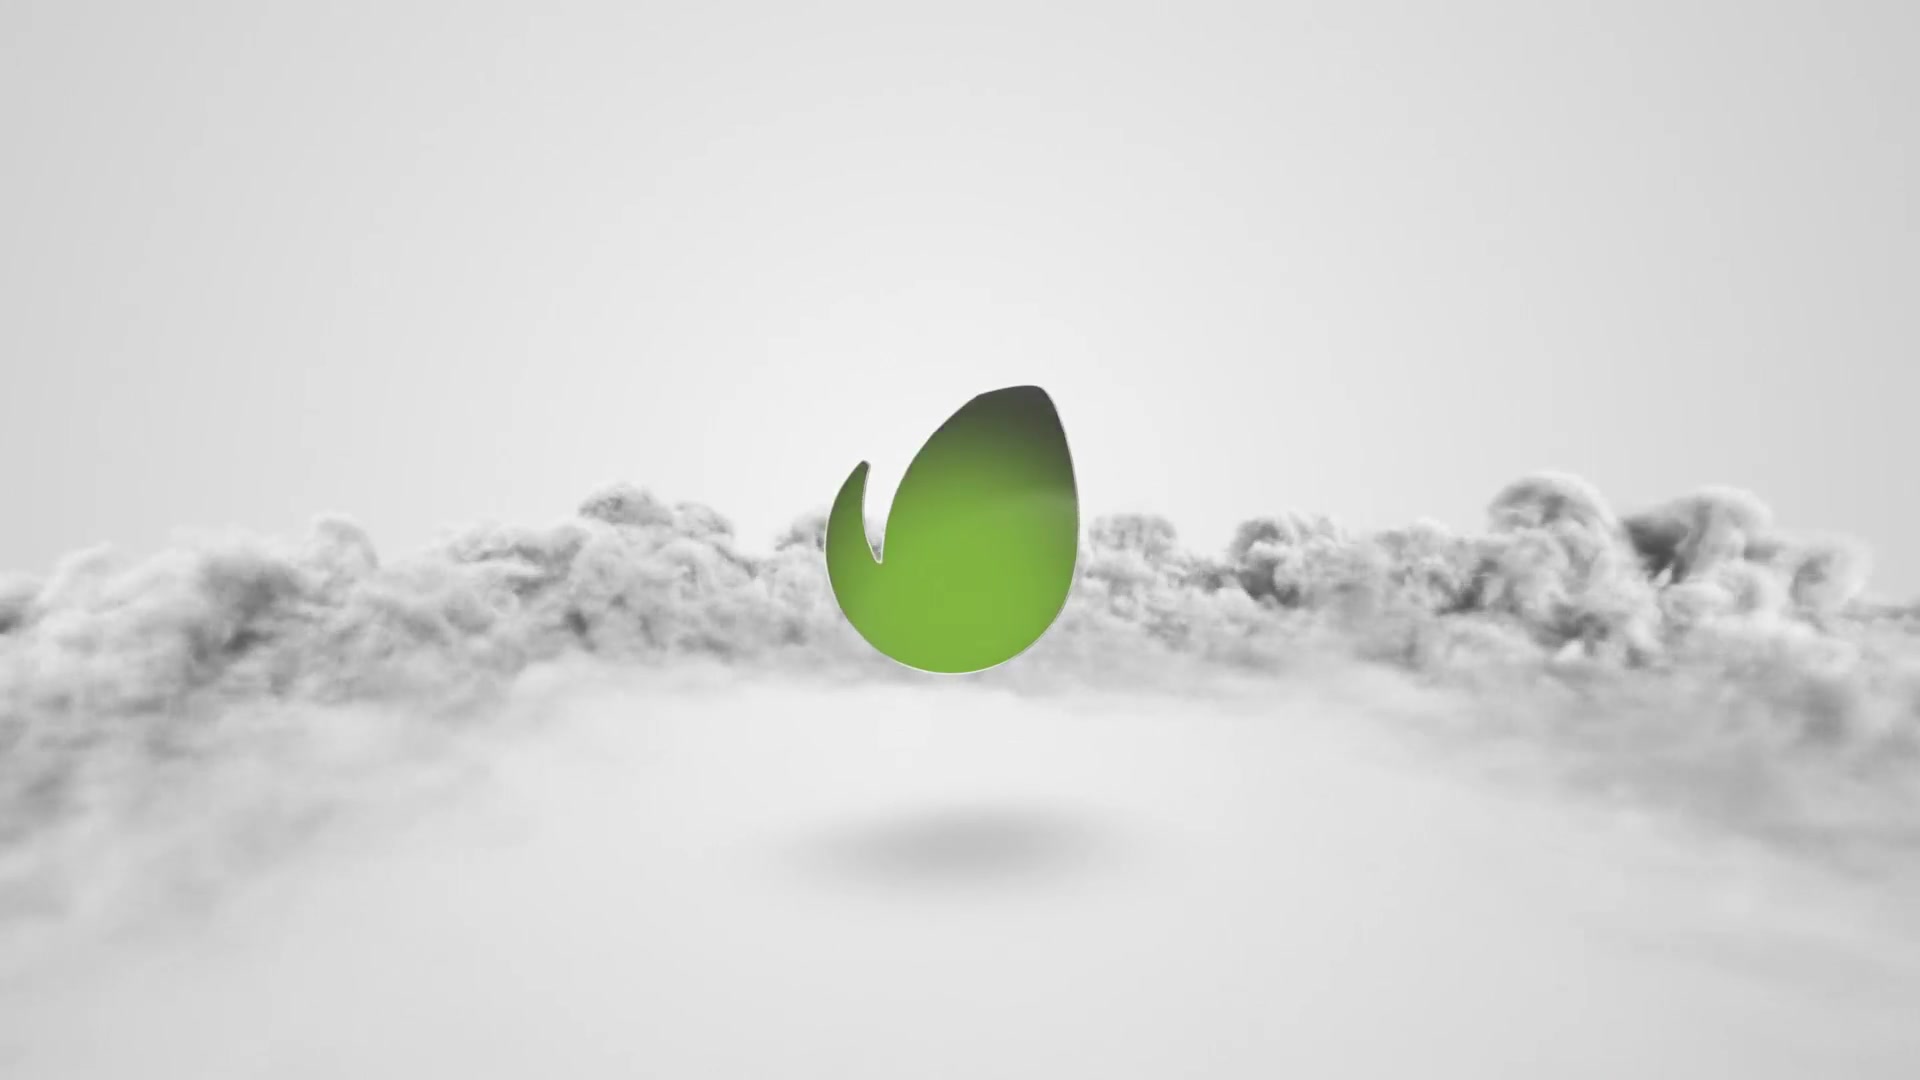 Clean Impact Logo - Download Videohive 16154938